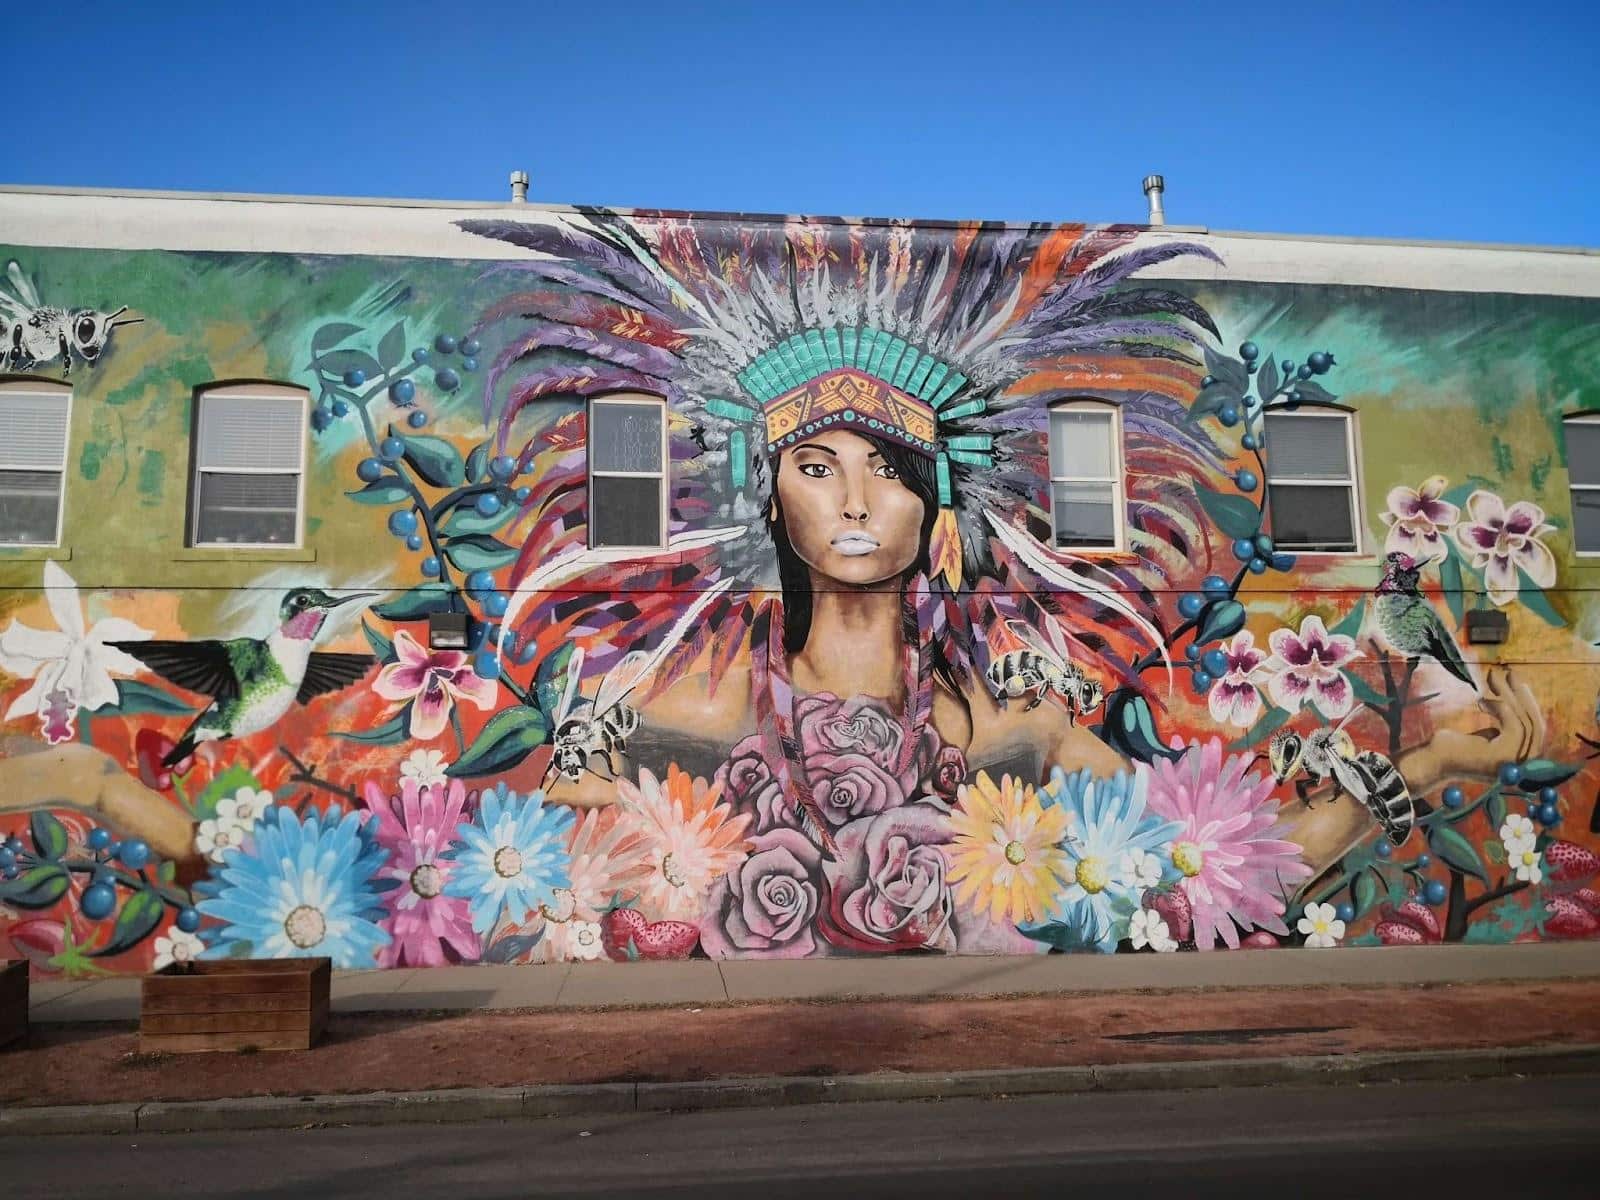 street art in Denver Five Points neighborhood